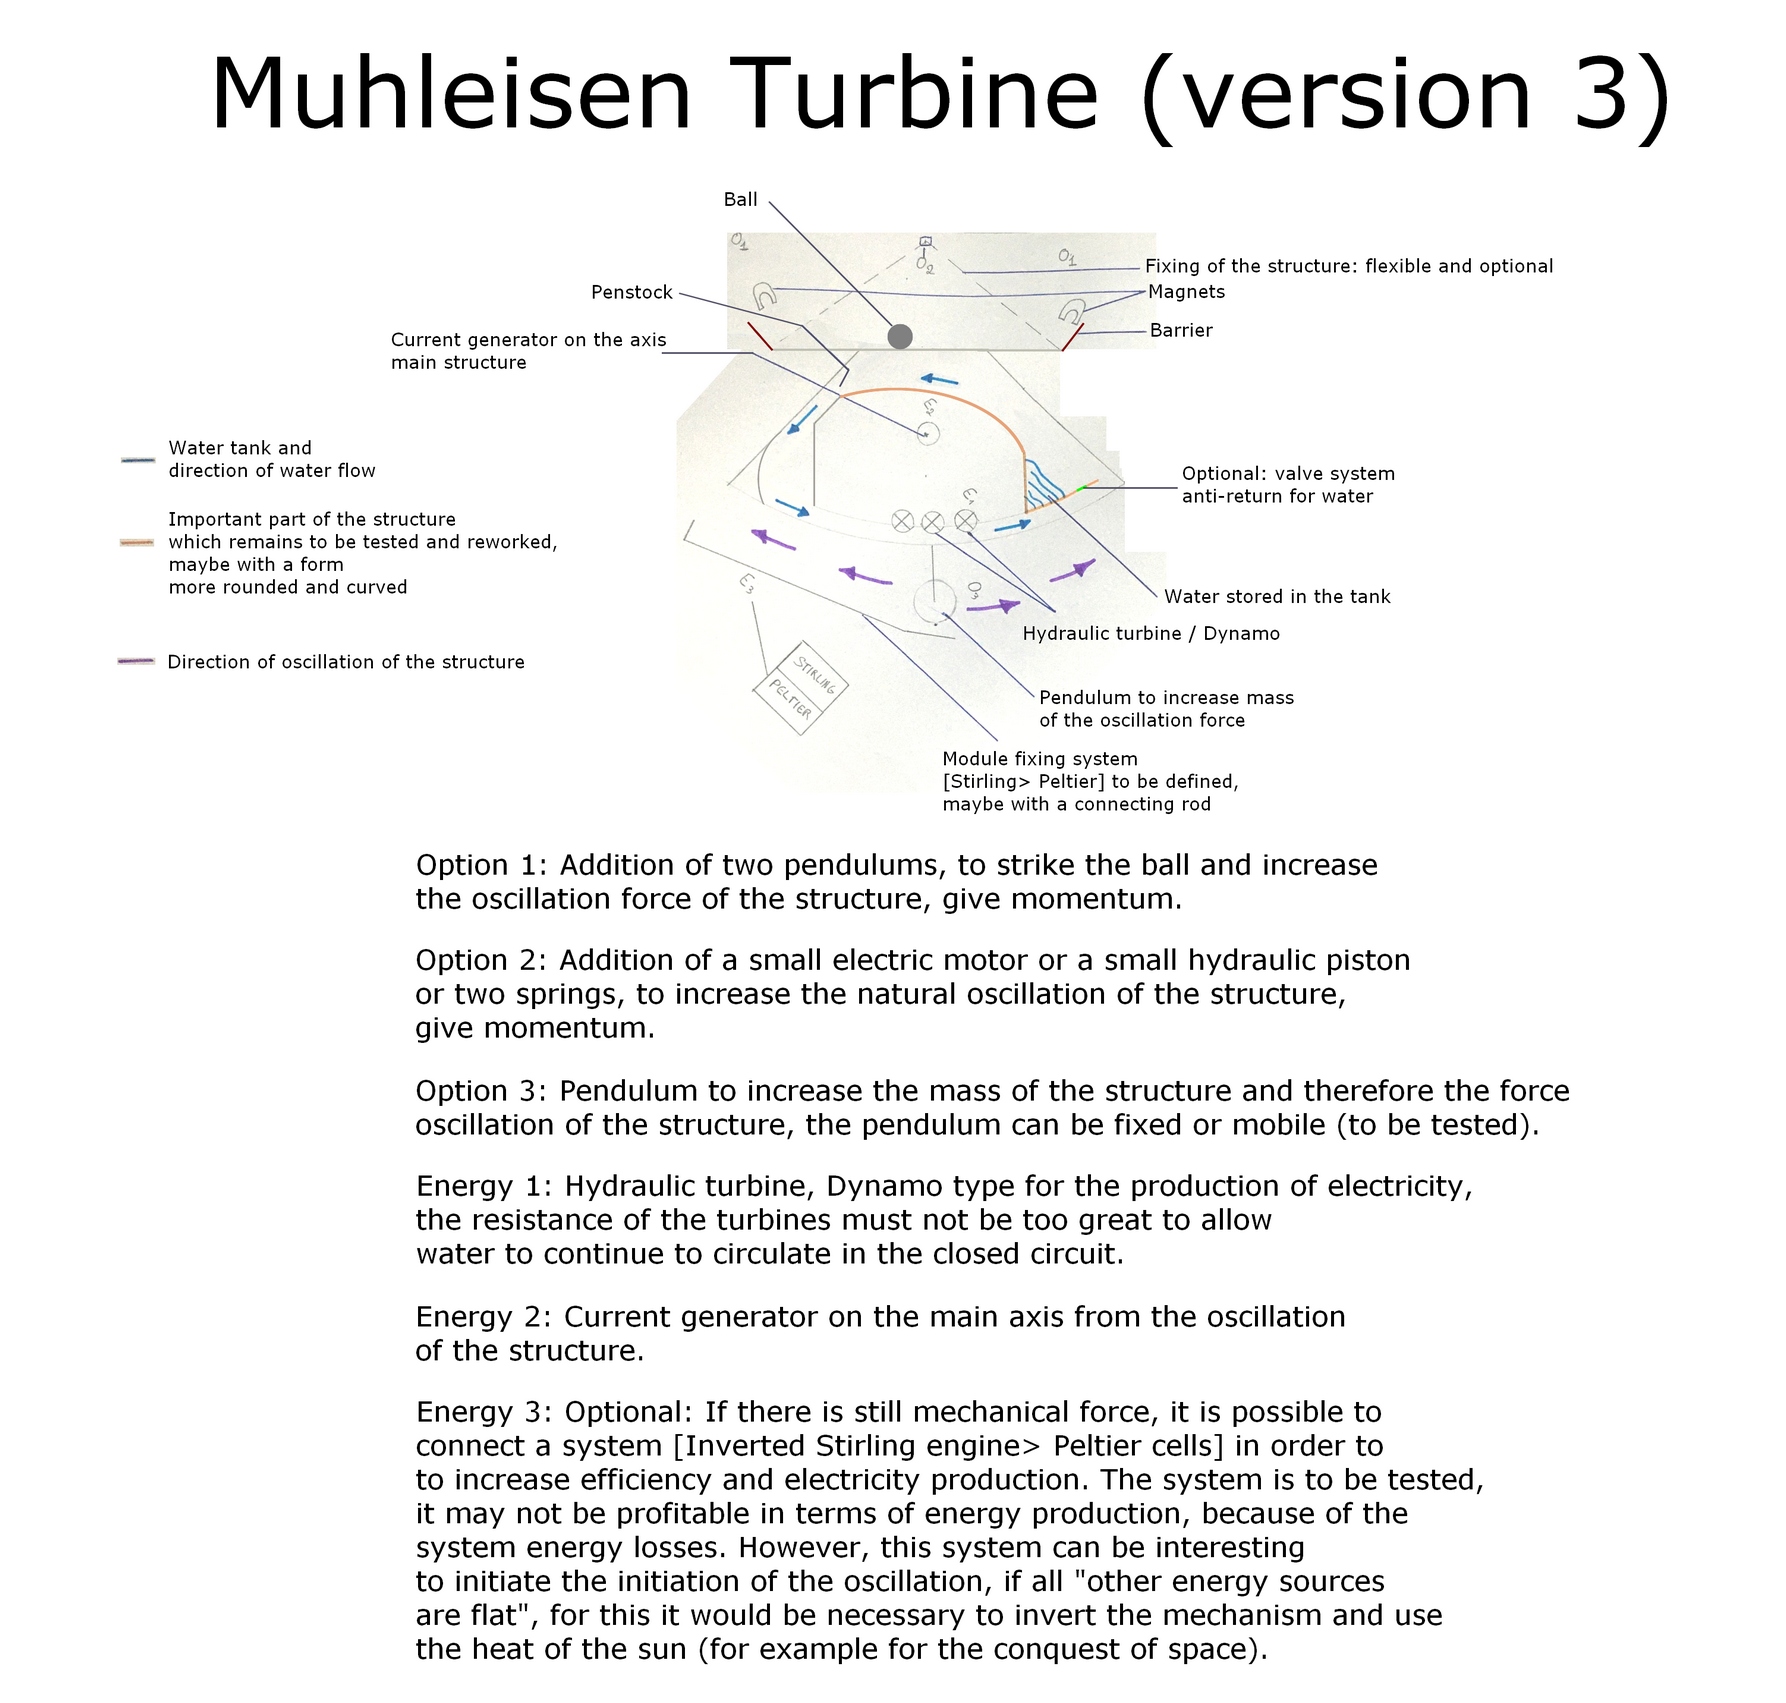 The Muhleisen Turbine third version